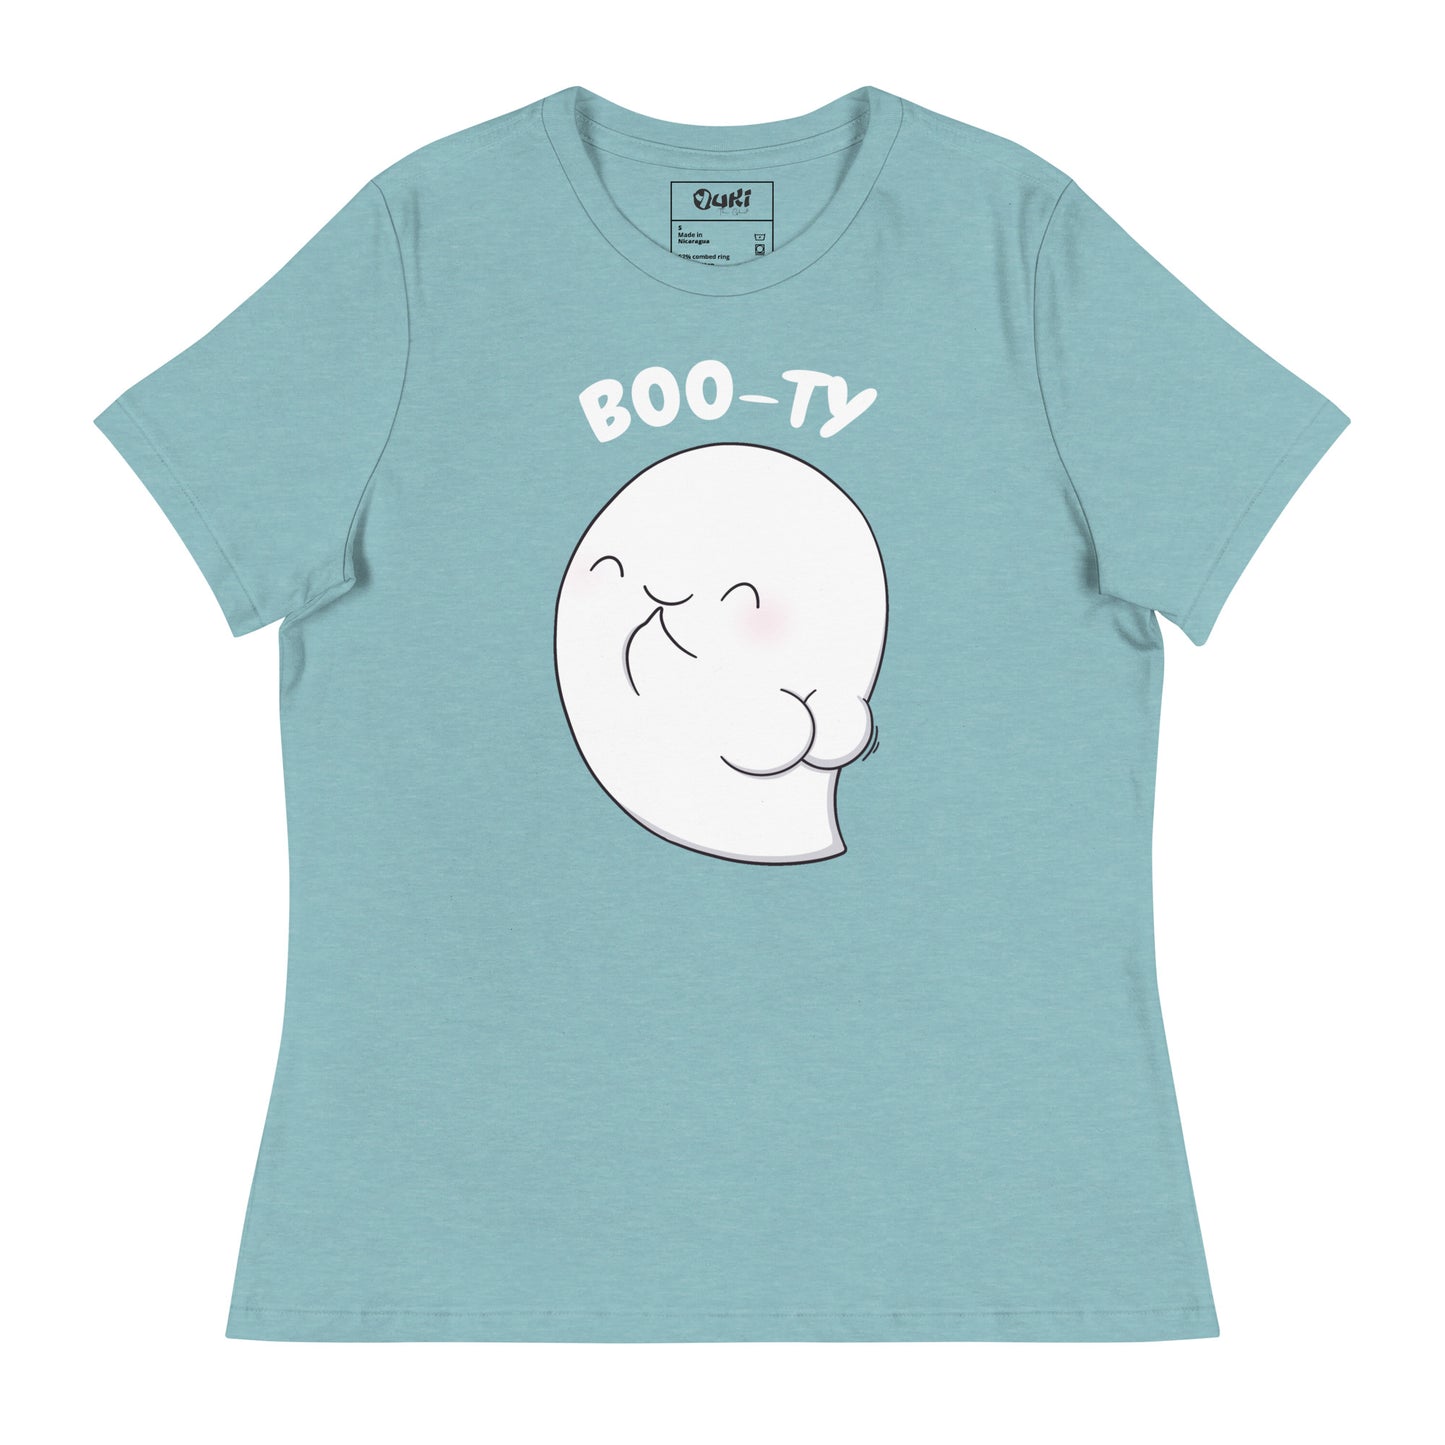 Boo-ty - Women's Relaxed T-Shirt